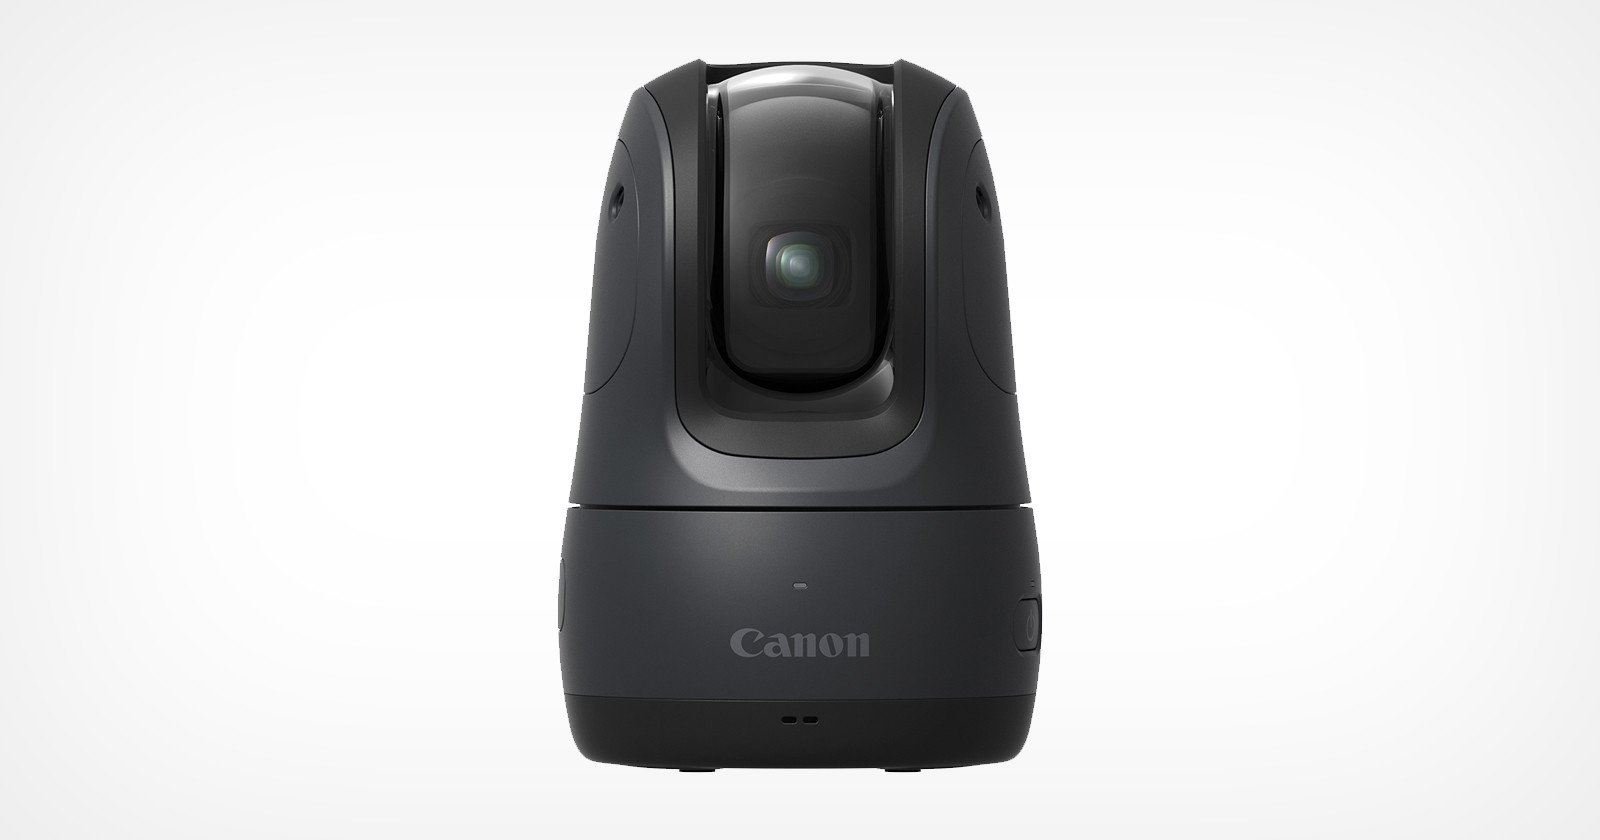  canon brings powershot pick active tracking camera 